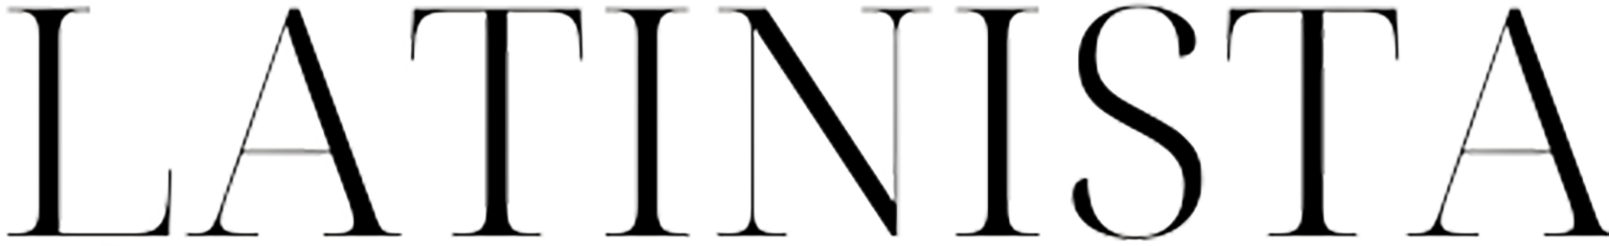 latinista-logo